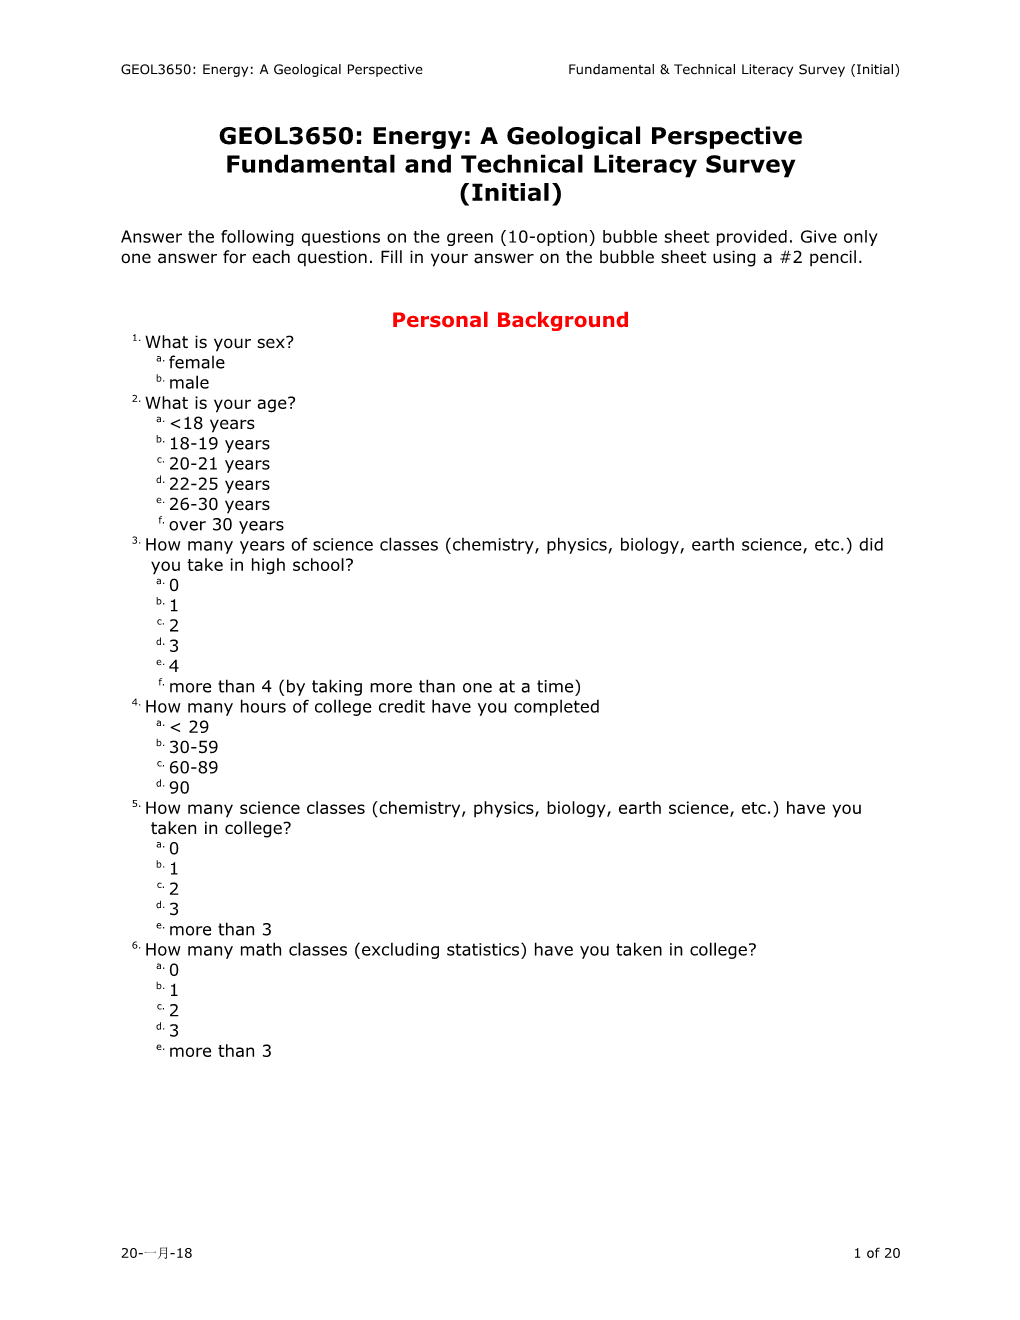 GEOL1100: Numerical/Unit Literacy Survey